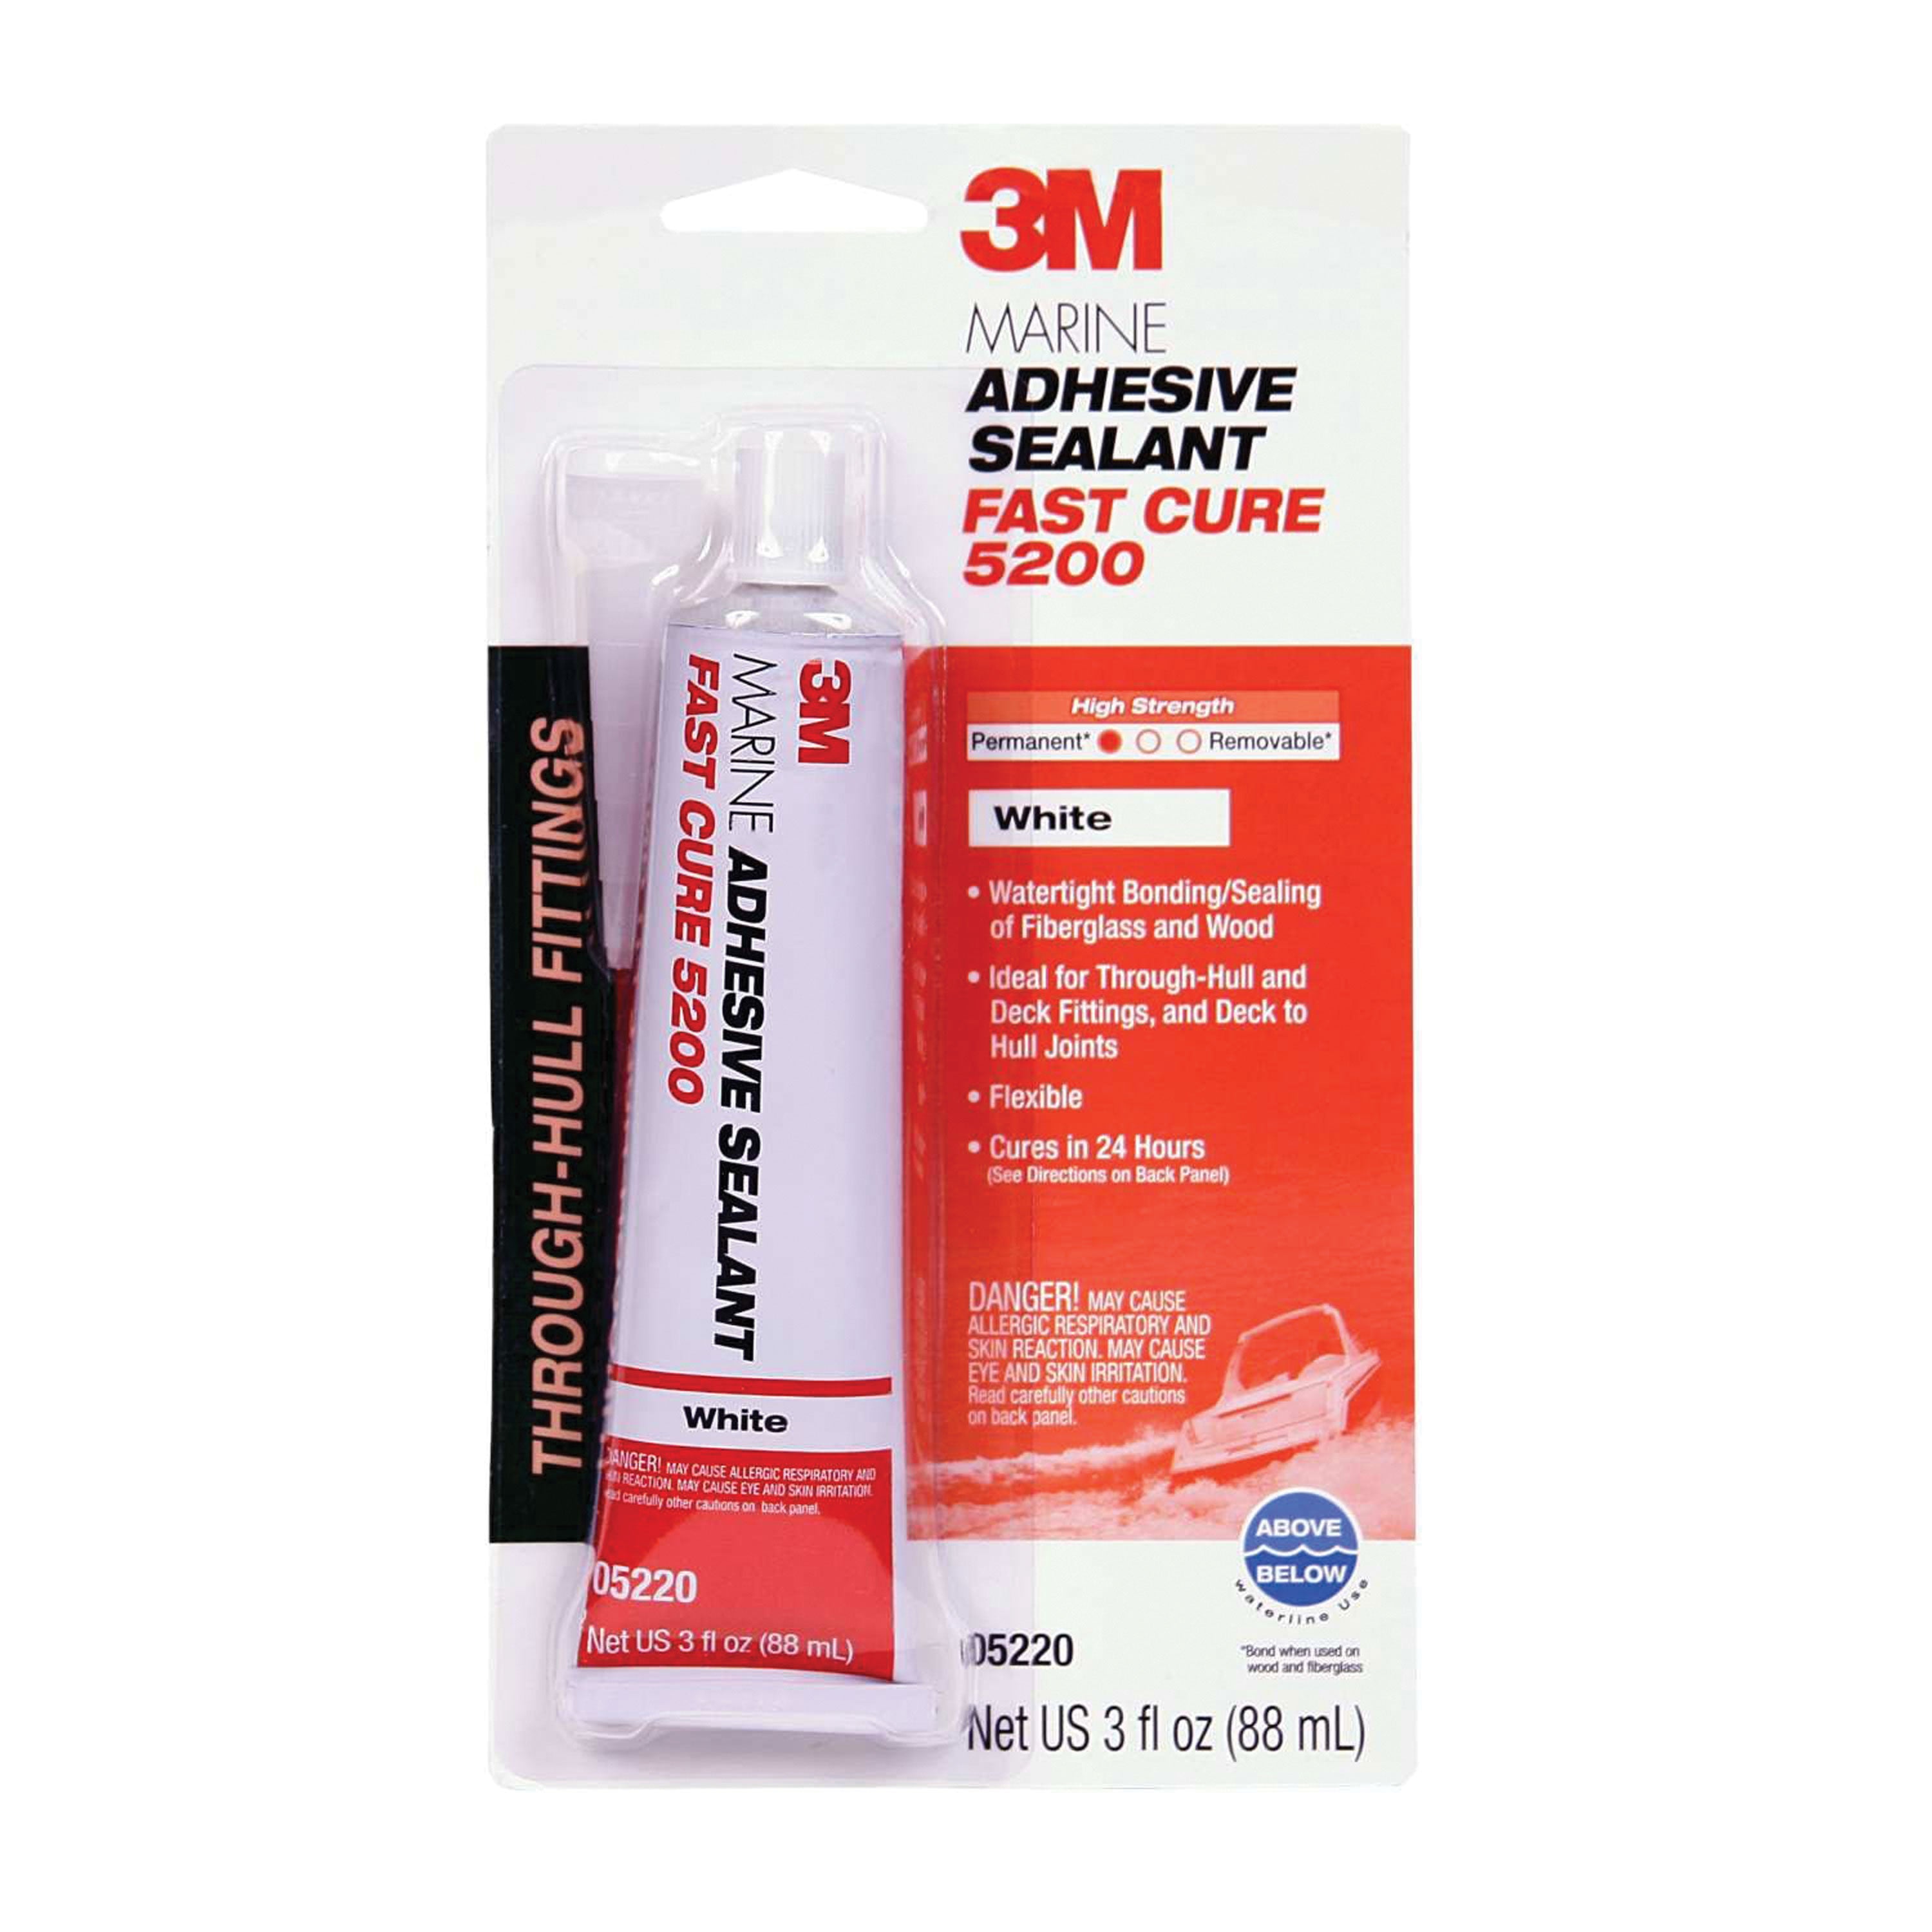 3M 05220 Marine Adhesive Sealant 5200 Fast Cure - 3 oz.